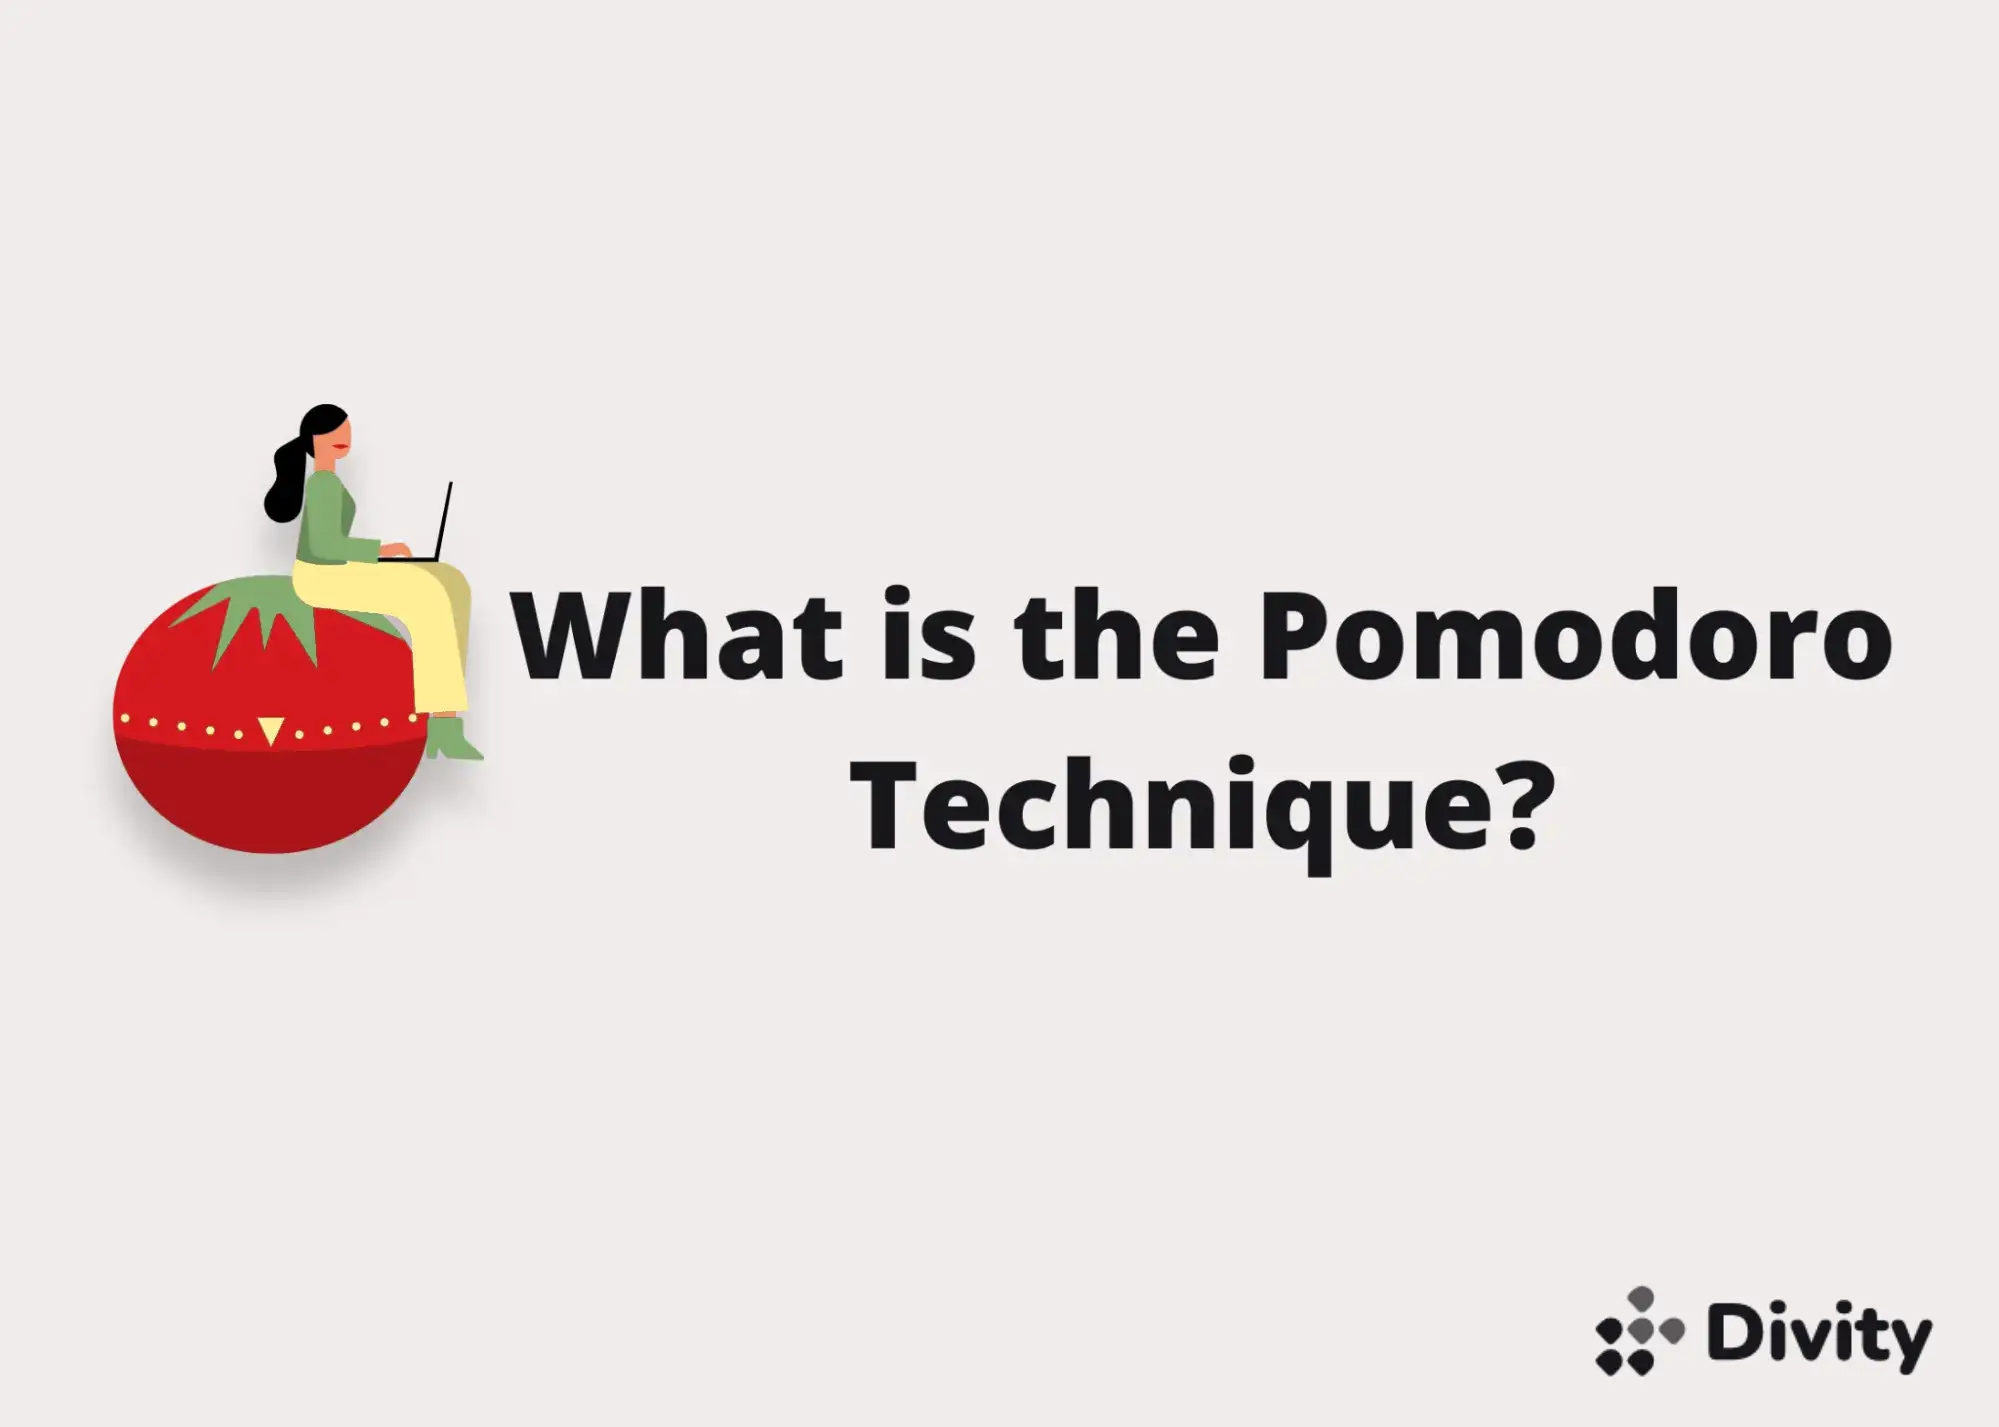 The Pomodoro technique: A proven method to improve your productivity